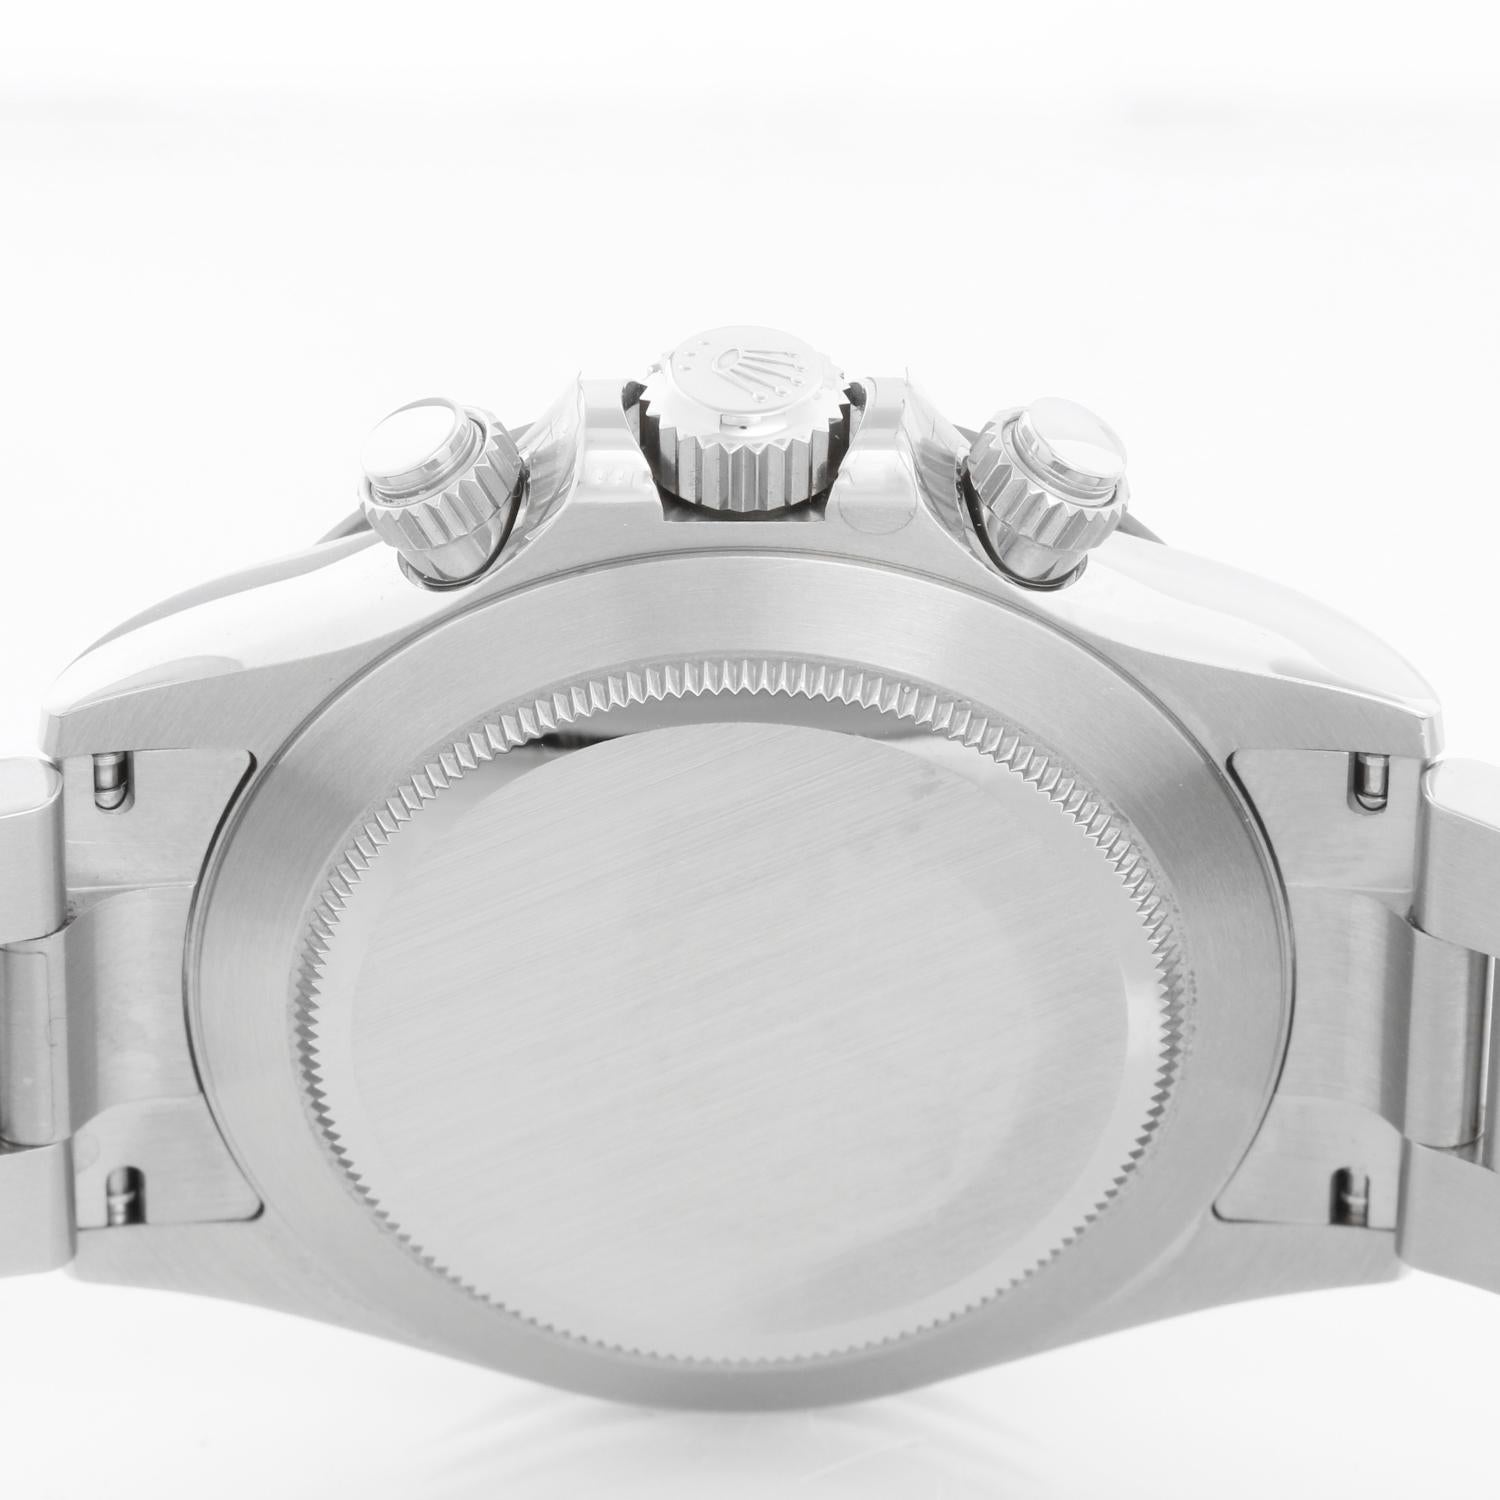 Rolex Ceramic White dial Cosmograph Daytona 116500LN For Sale 1